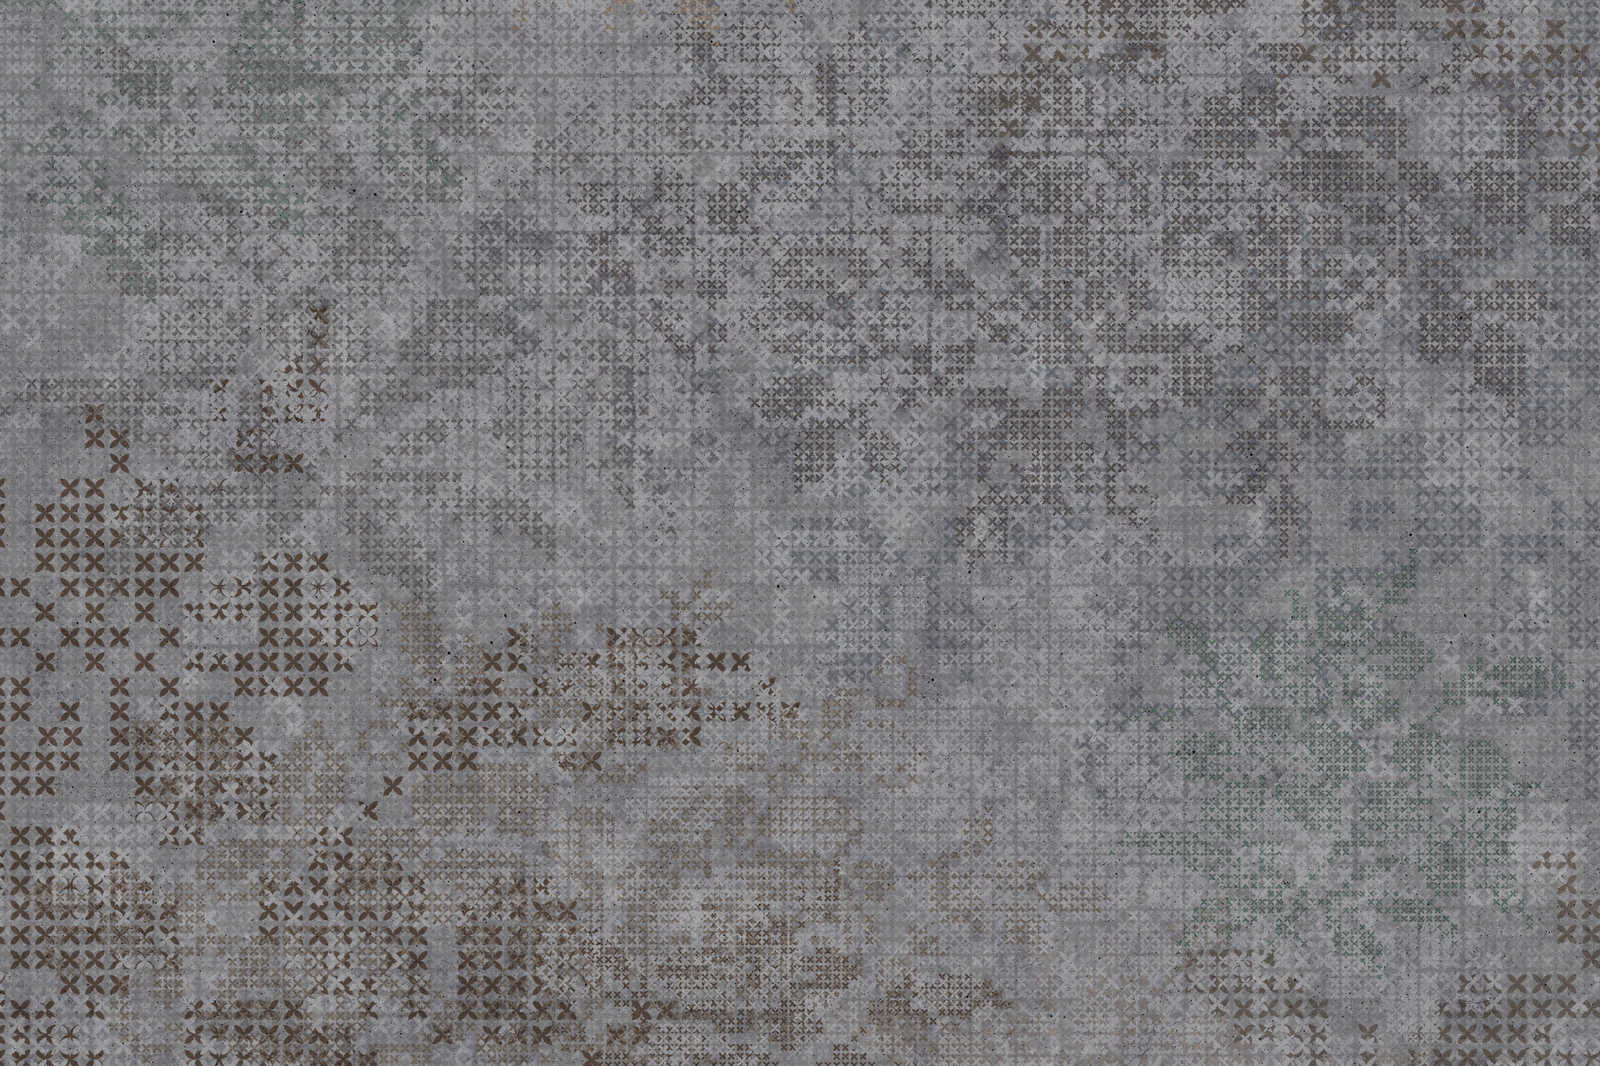             Leinwandbild Kreuz Muster im Pixel-Stil – 1,20 m x 0,80 m
        